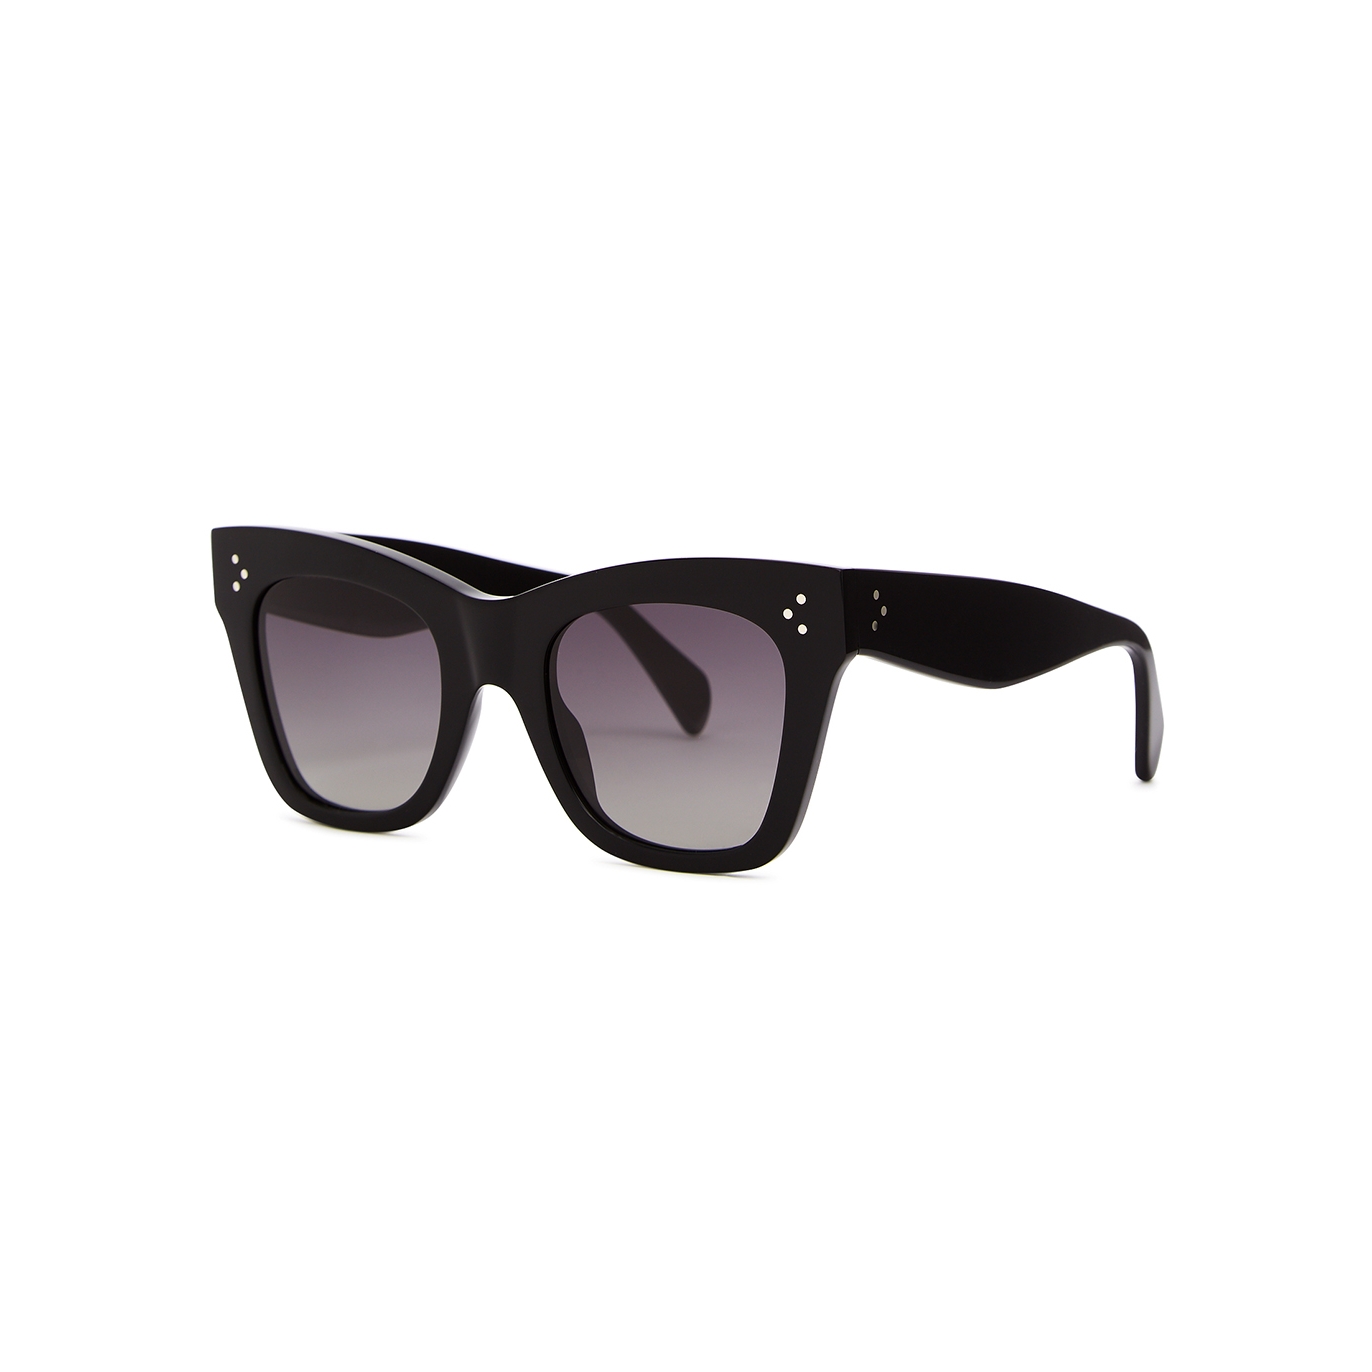 Celine Black Square-frame Sunglasses - Black And Grey